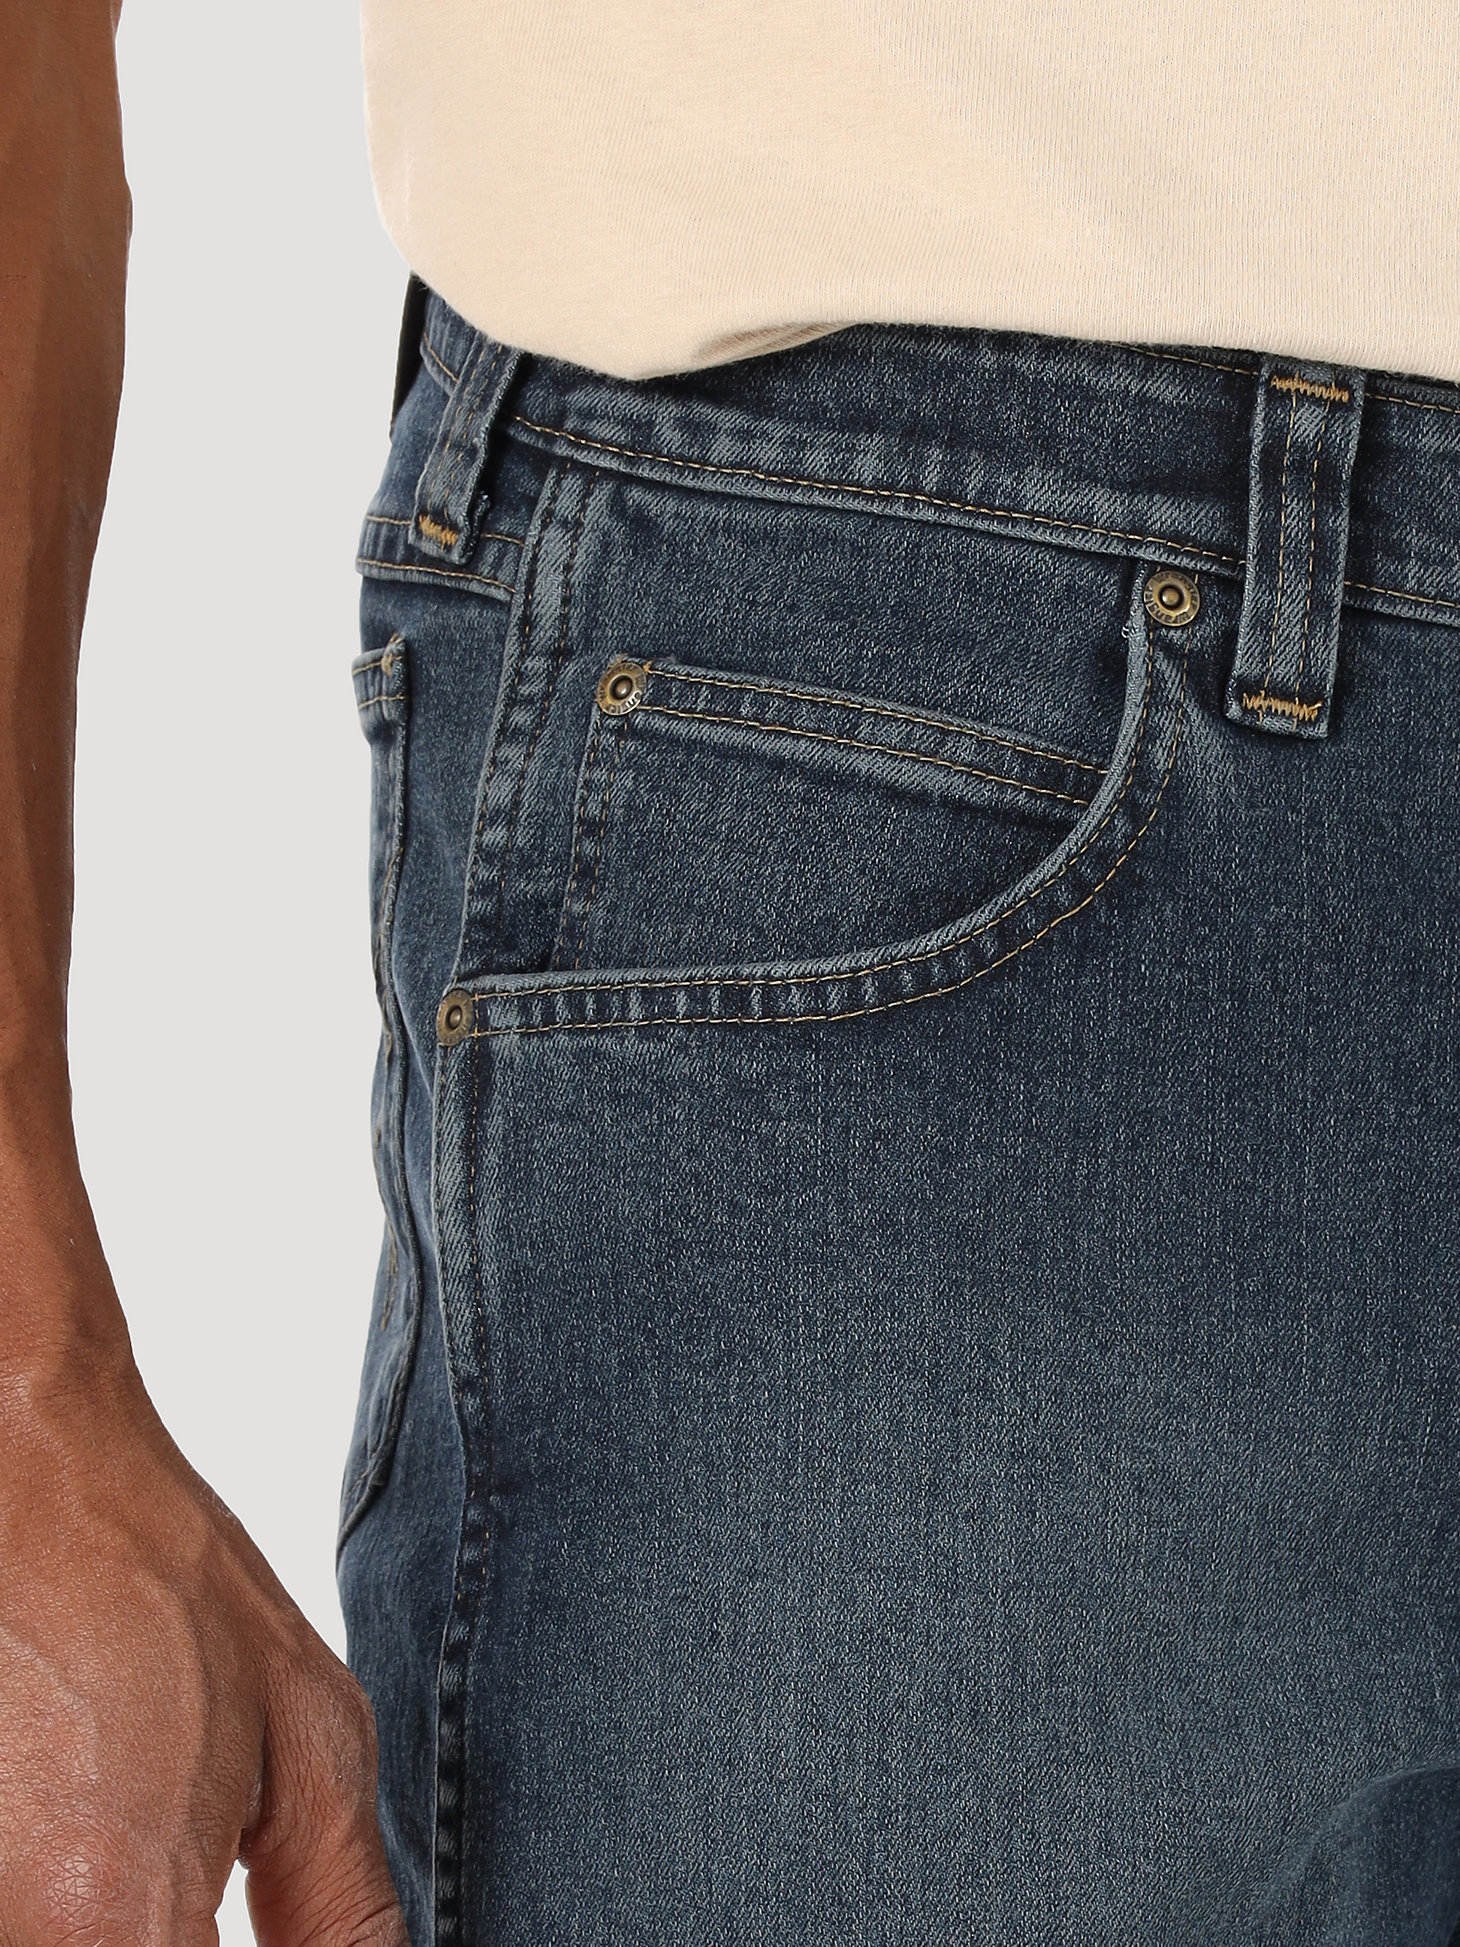 Wrangler Rugged Wear® Performance Series Regular Fit Jean in Mid Indigo alternative view 4